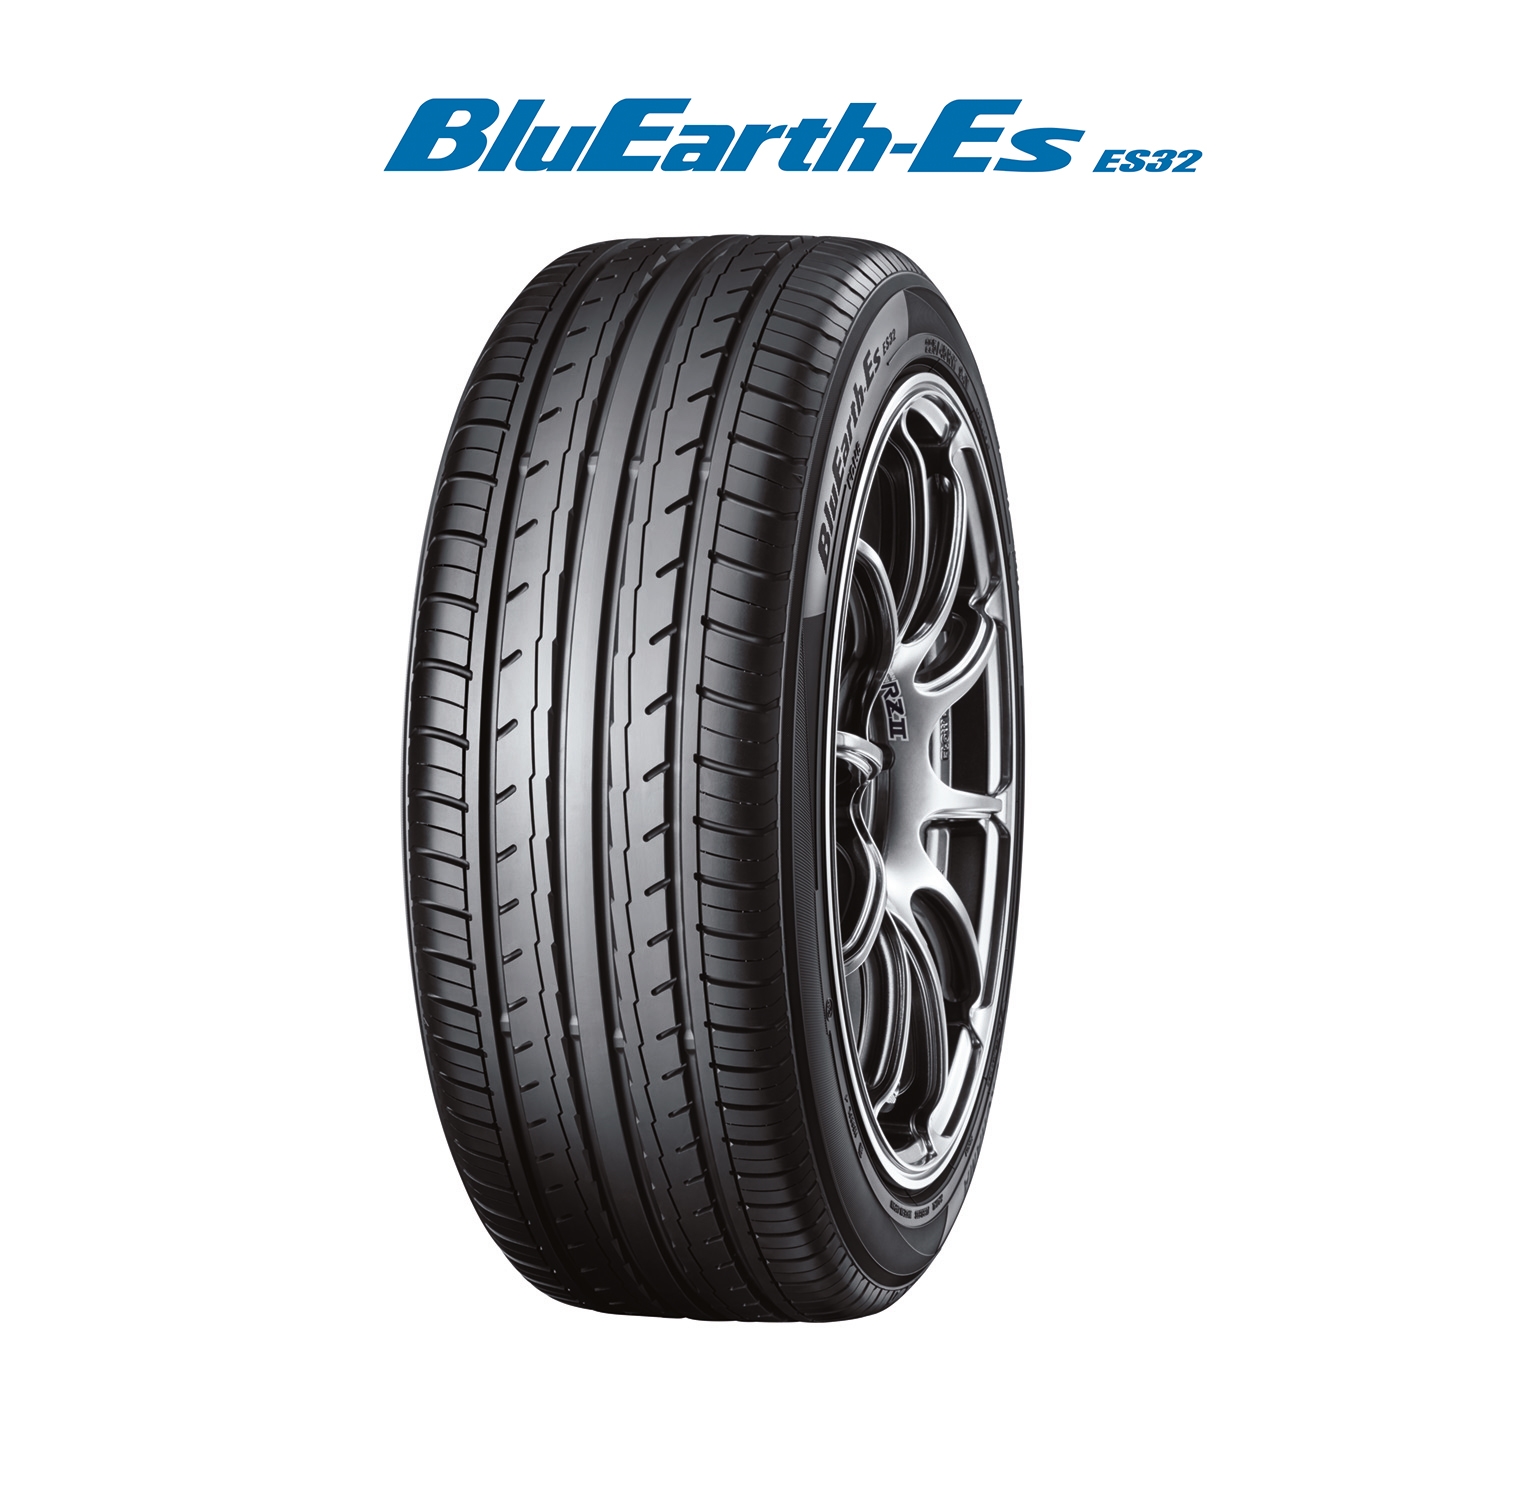 Yokohama Bluearth-es Es32 | What Tyre | Independent tyre comparison